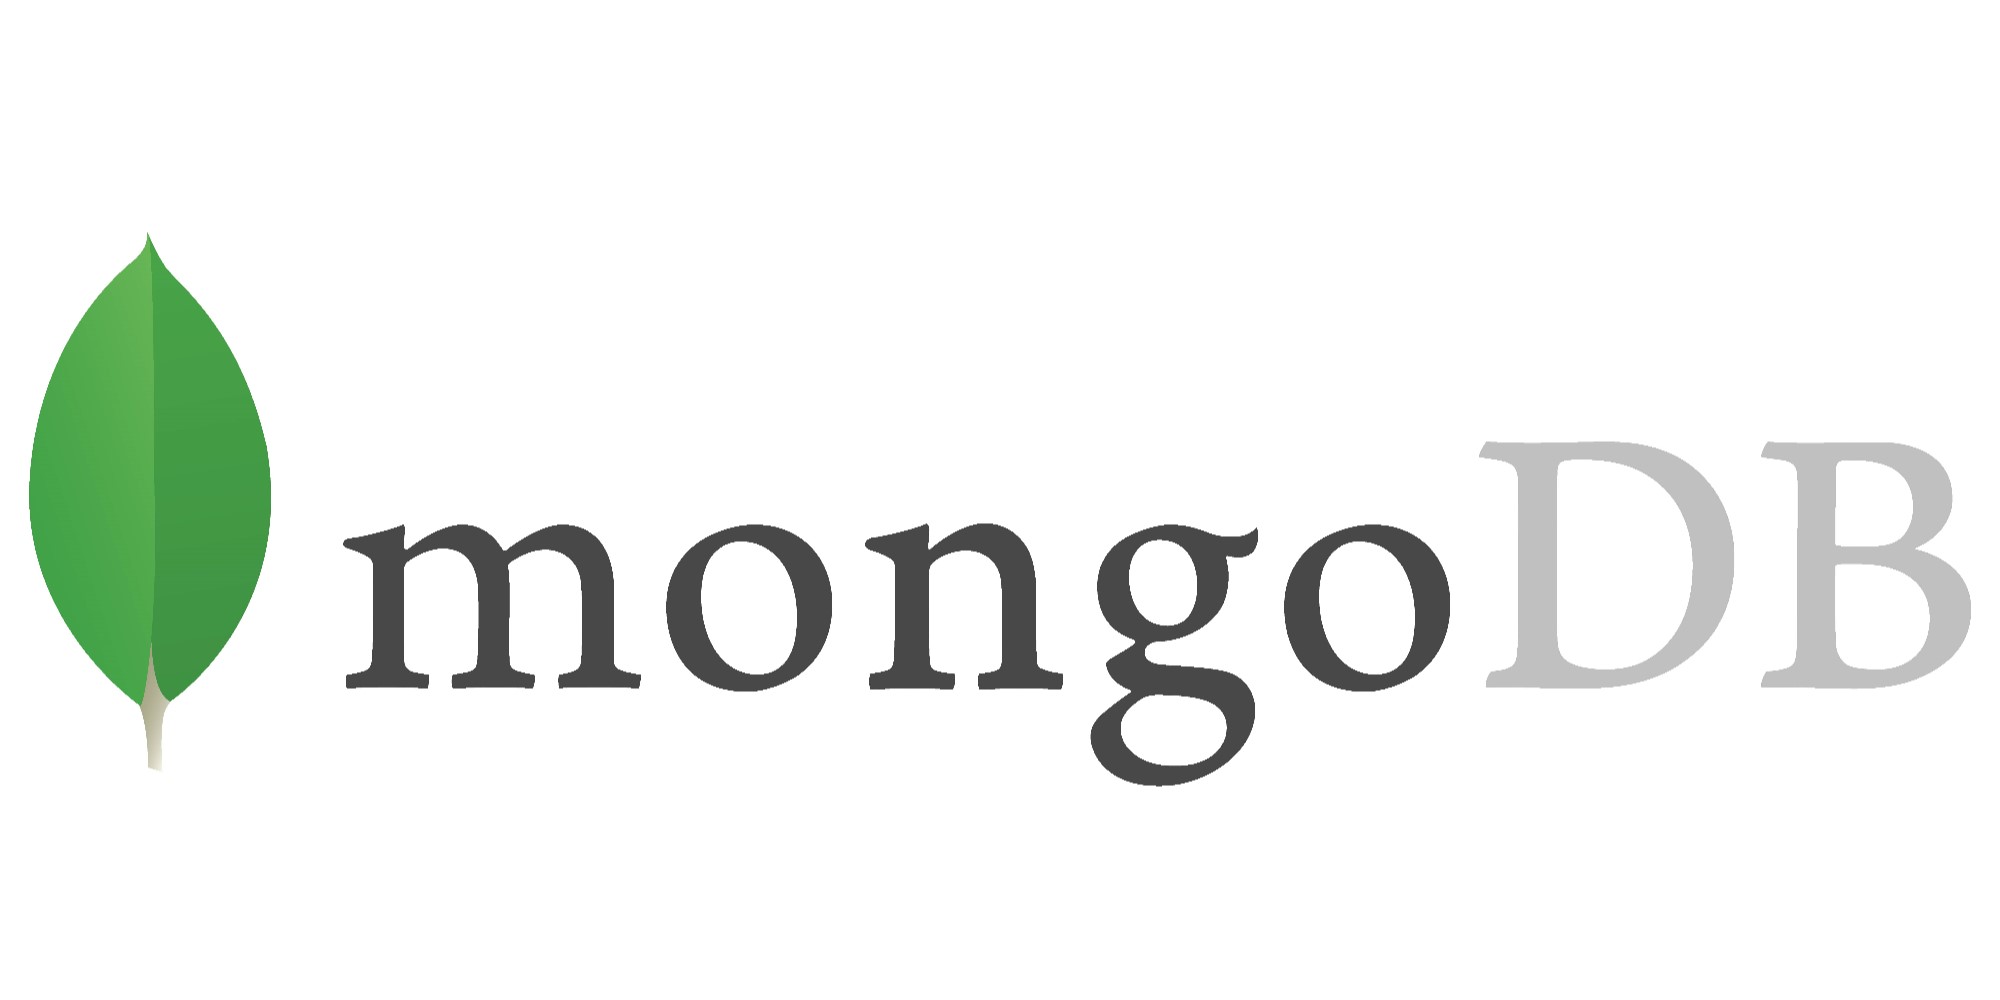 mongodb stock